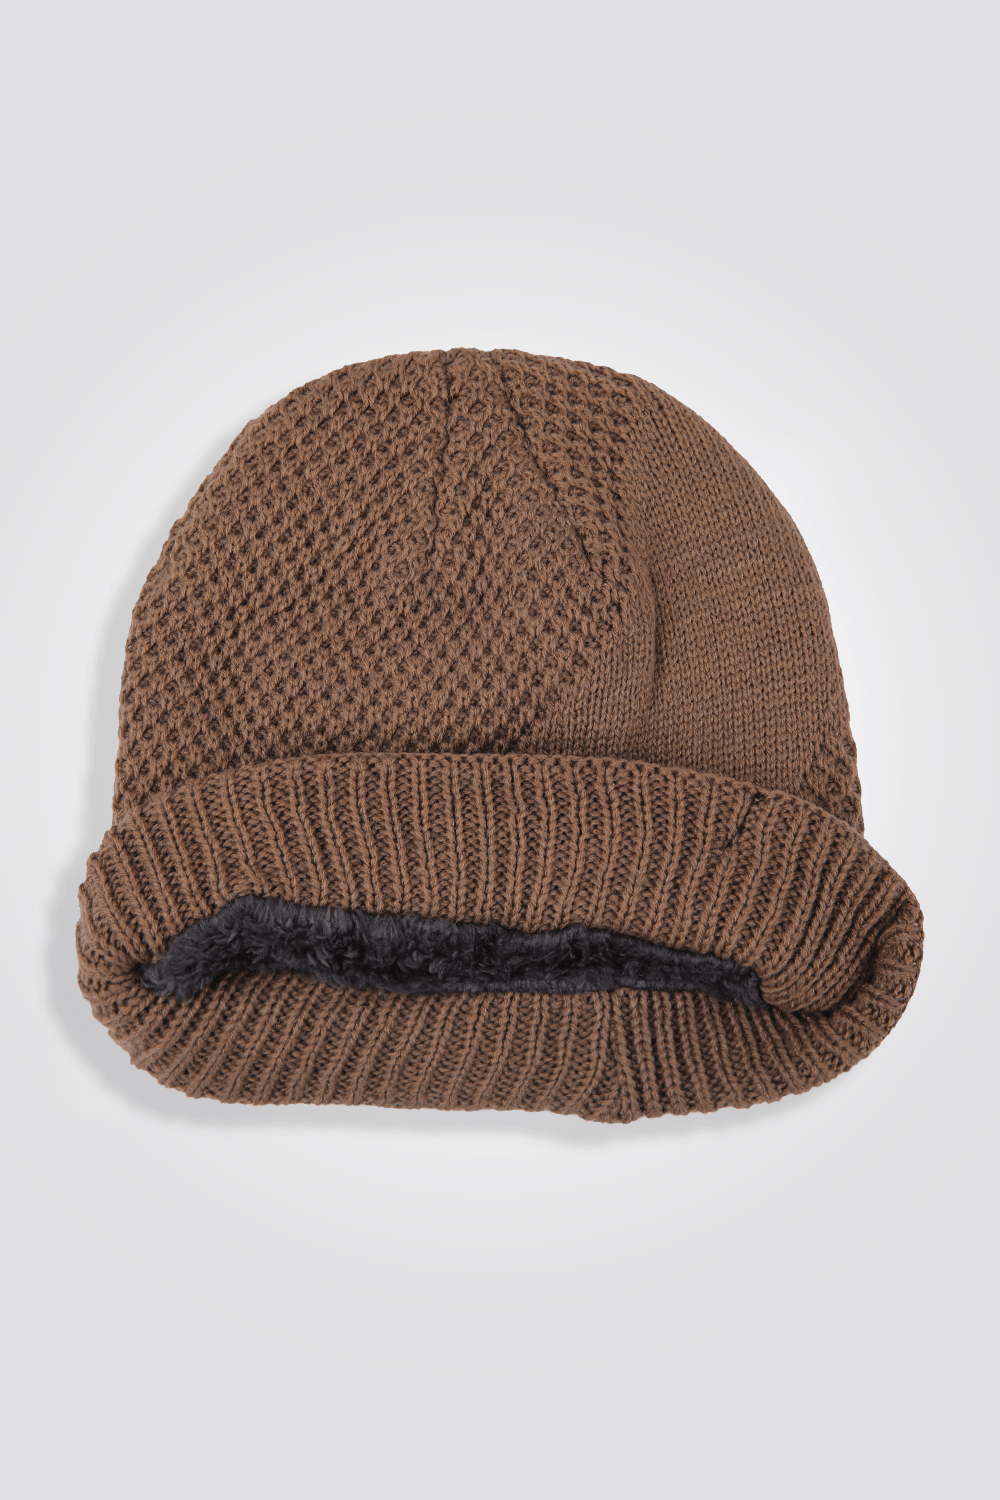 KENNETH COLE - כובע גרב לגבר בצבע חום - MASHBIR//365